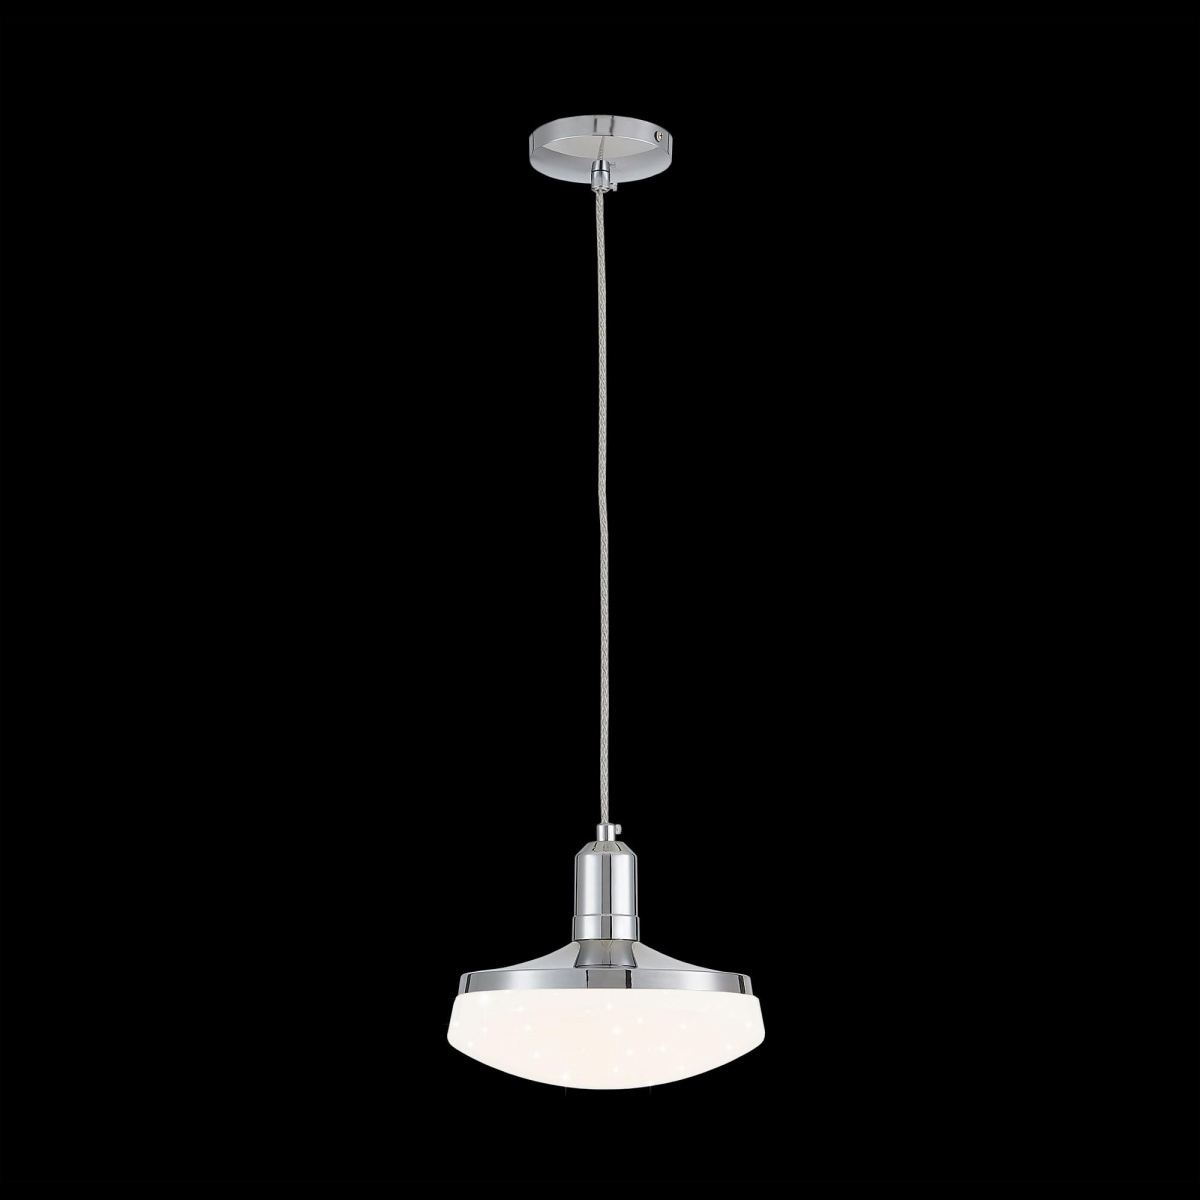 подвесной светильник citilux тамбо (tambo), артикул CL716111Wz